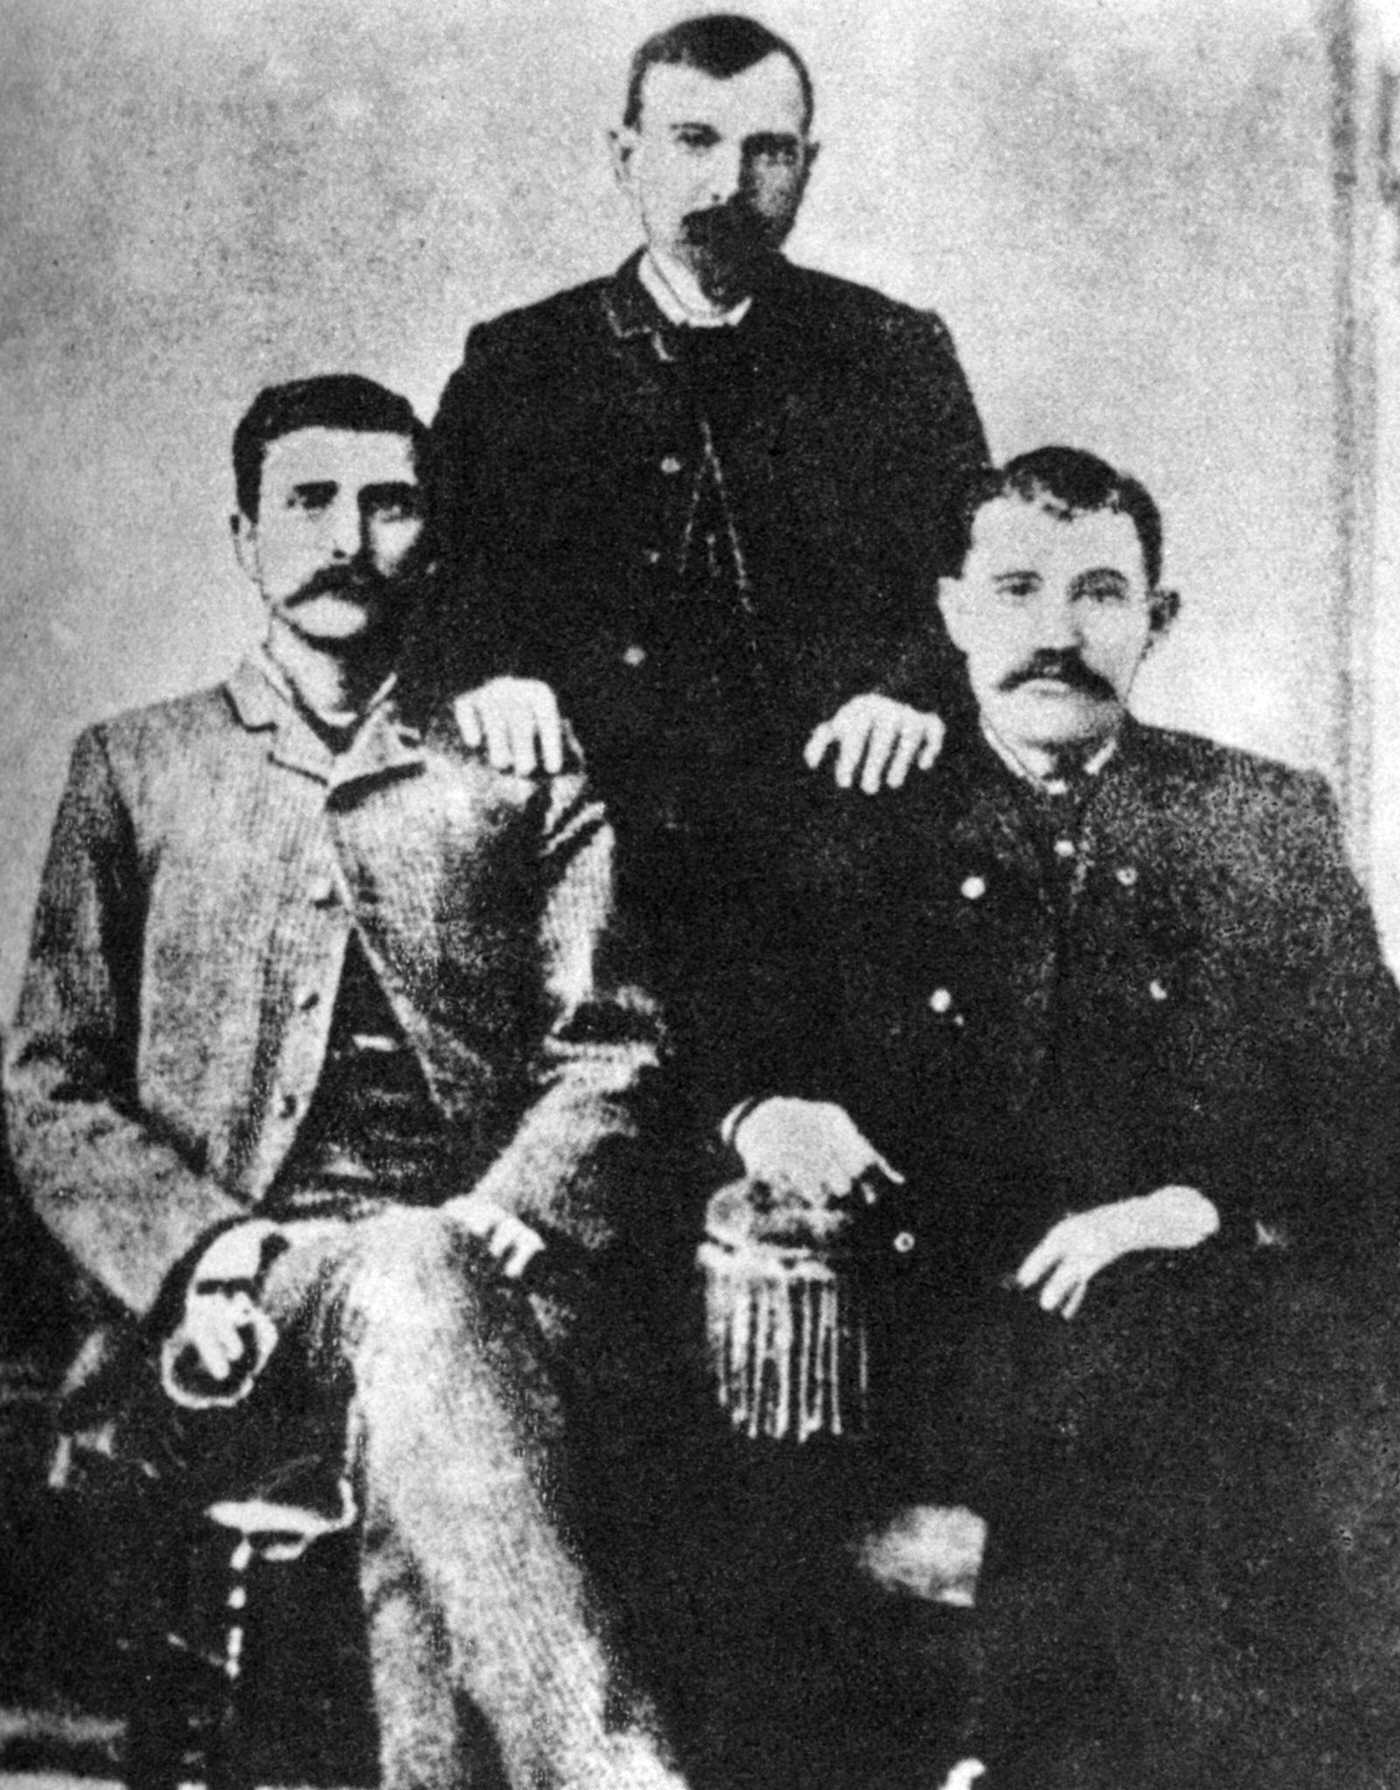 Pat Garrett, James Brent and John W Poe, sheriffs of Lincoln County, 1880-1882